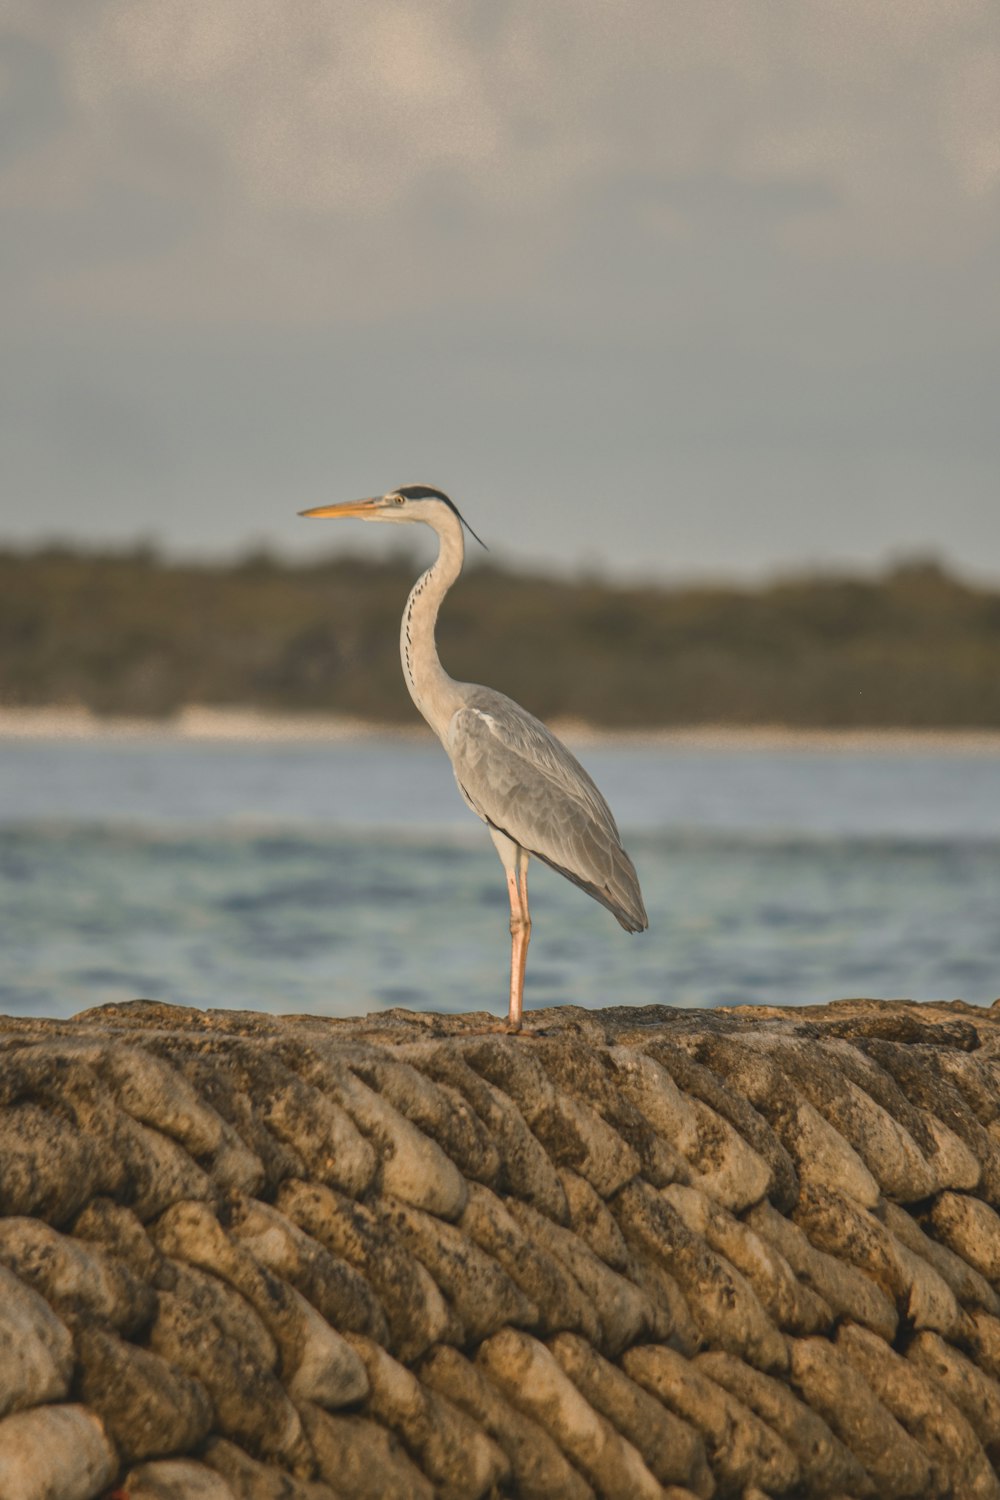 gray bird on brown rock near body of water during daytime